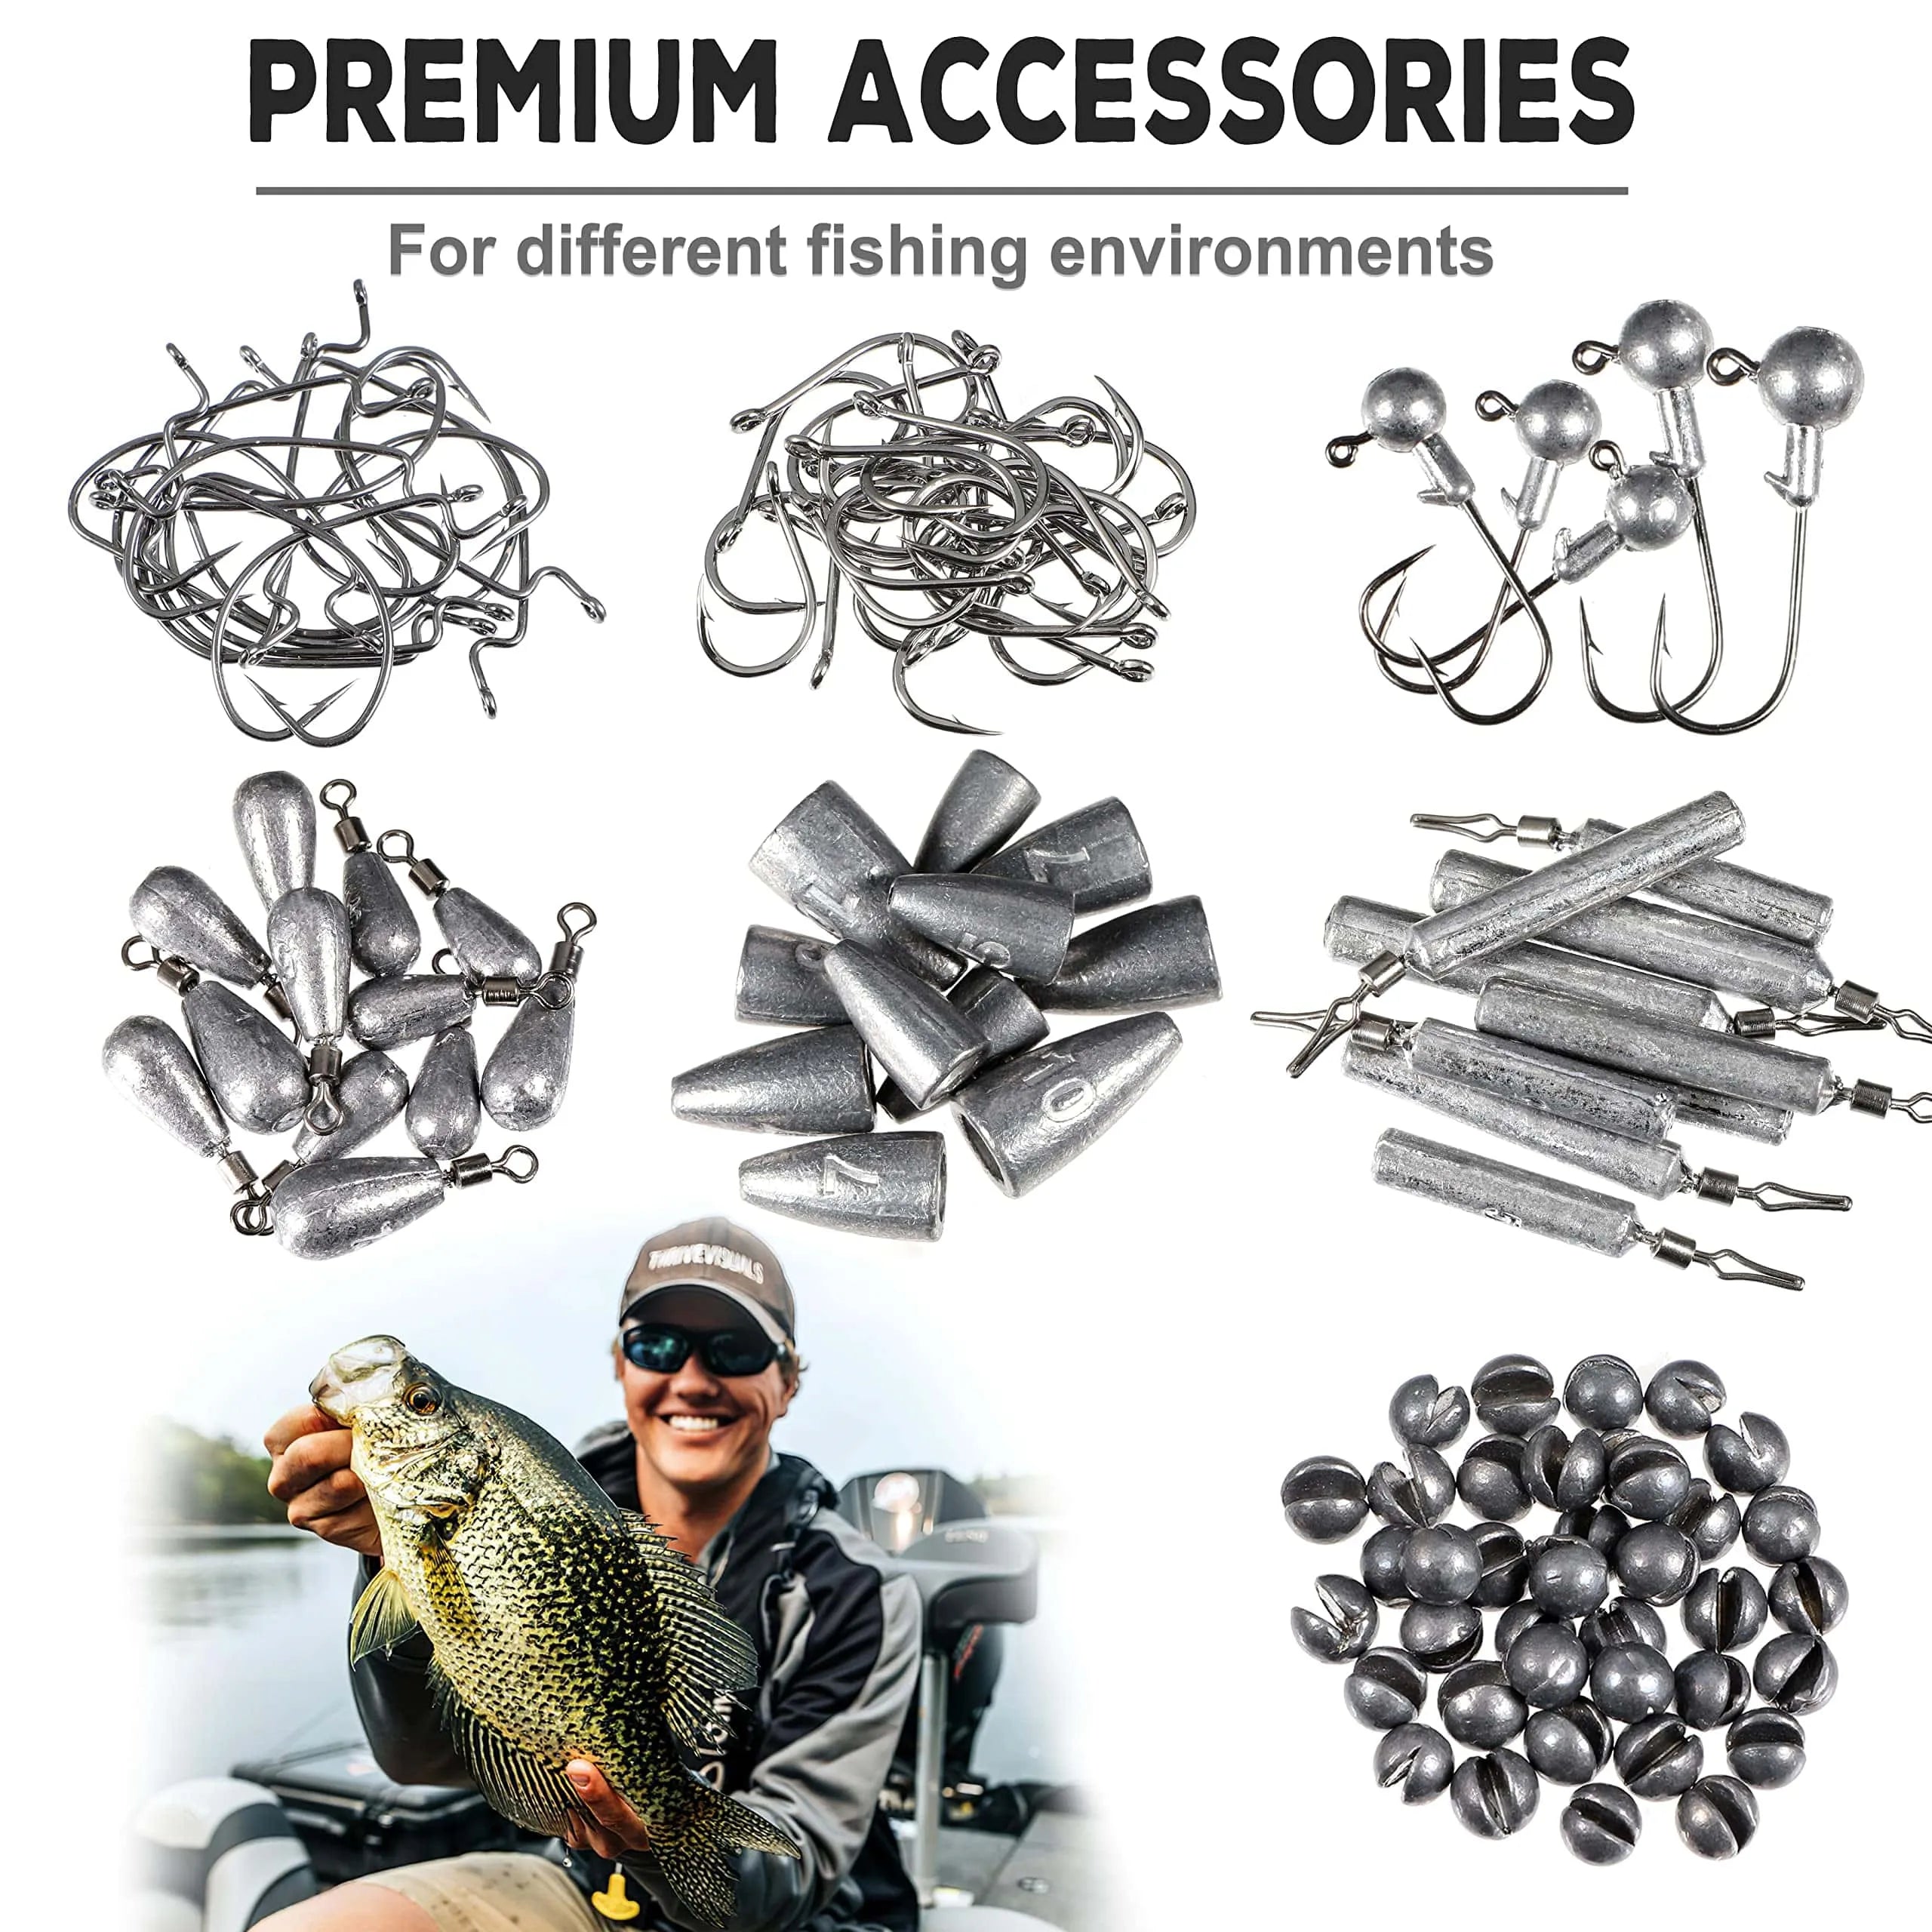 PLUSINNO 387 PCS Kit de accesorios de pesca